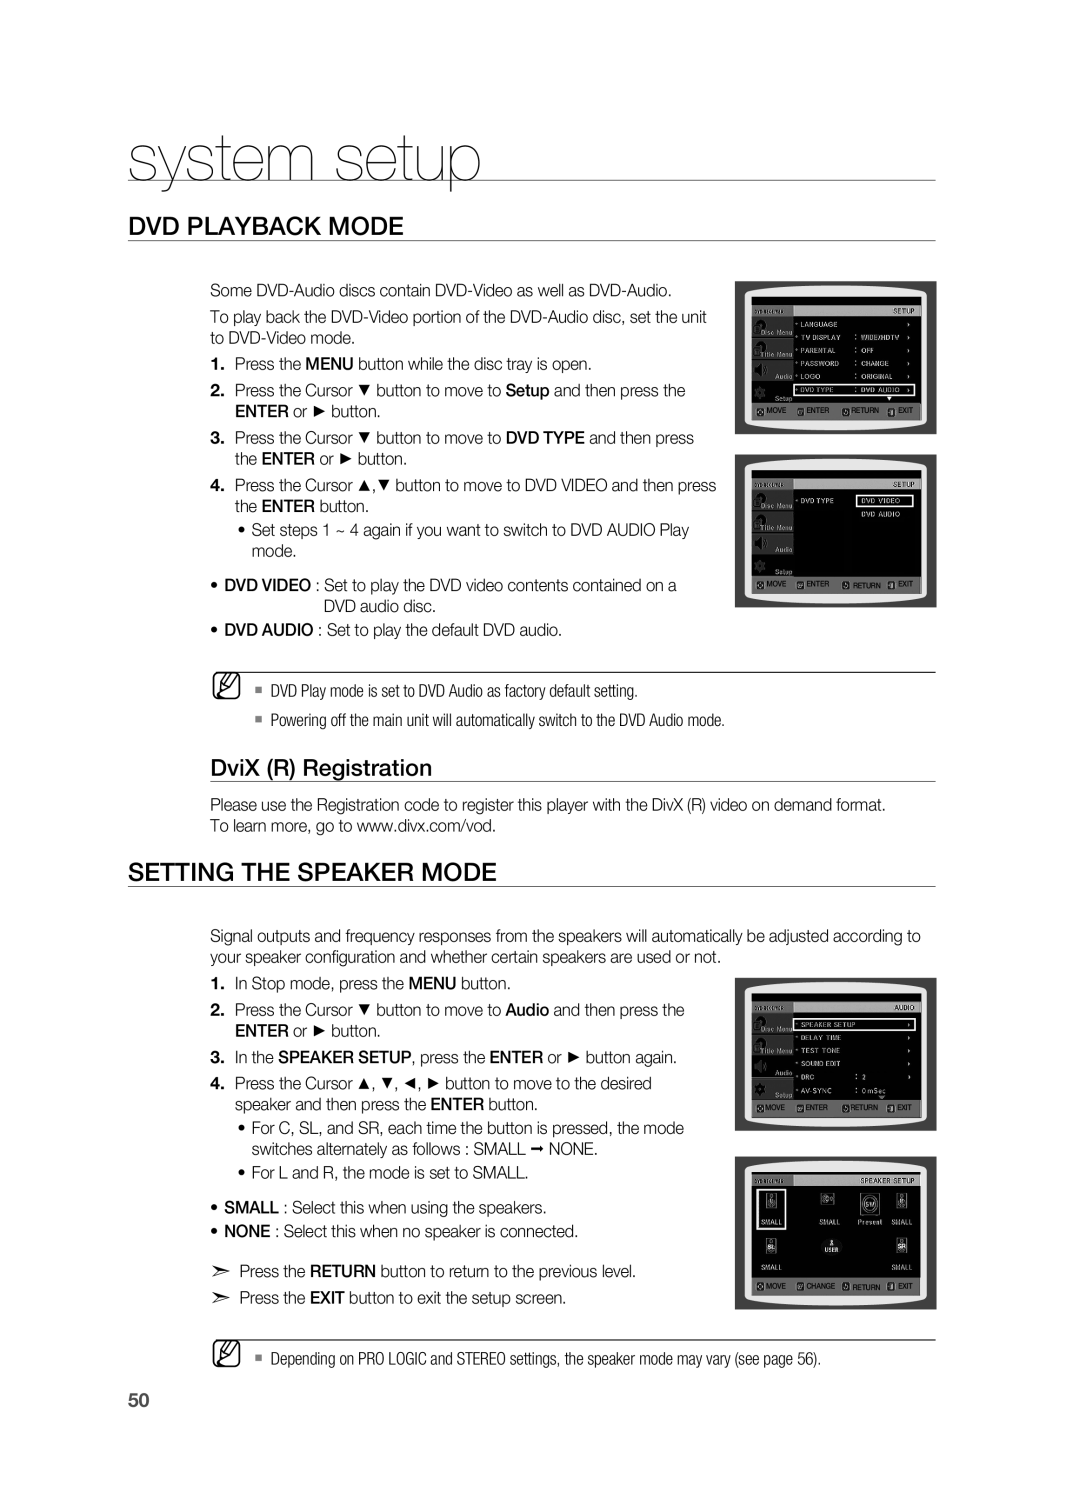 Samsung HT-TX715 user manual DVD Playback Mode, Setting the SPEAKER MODE, system setup, DviX R Registration 